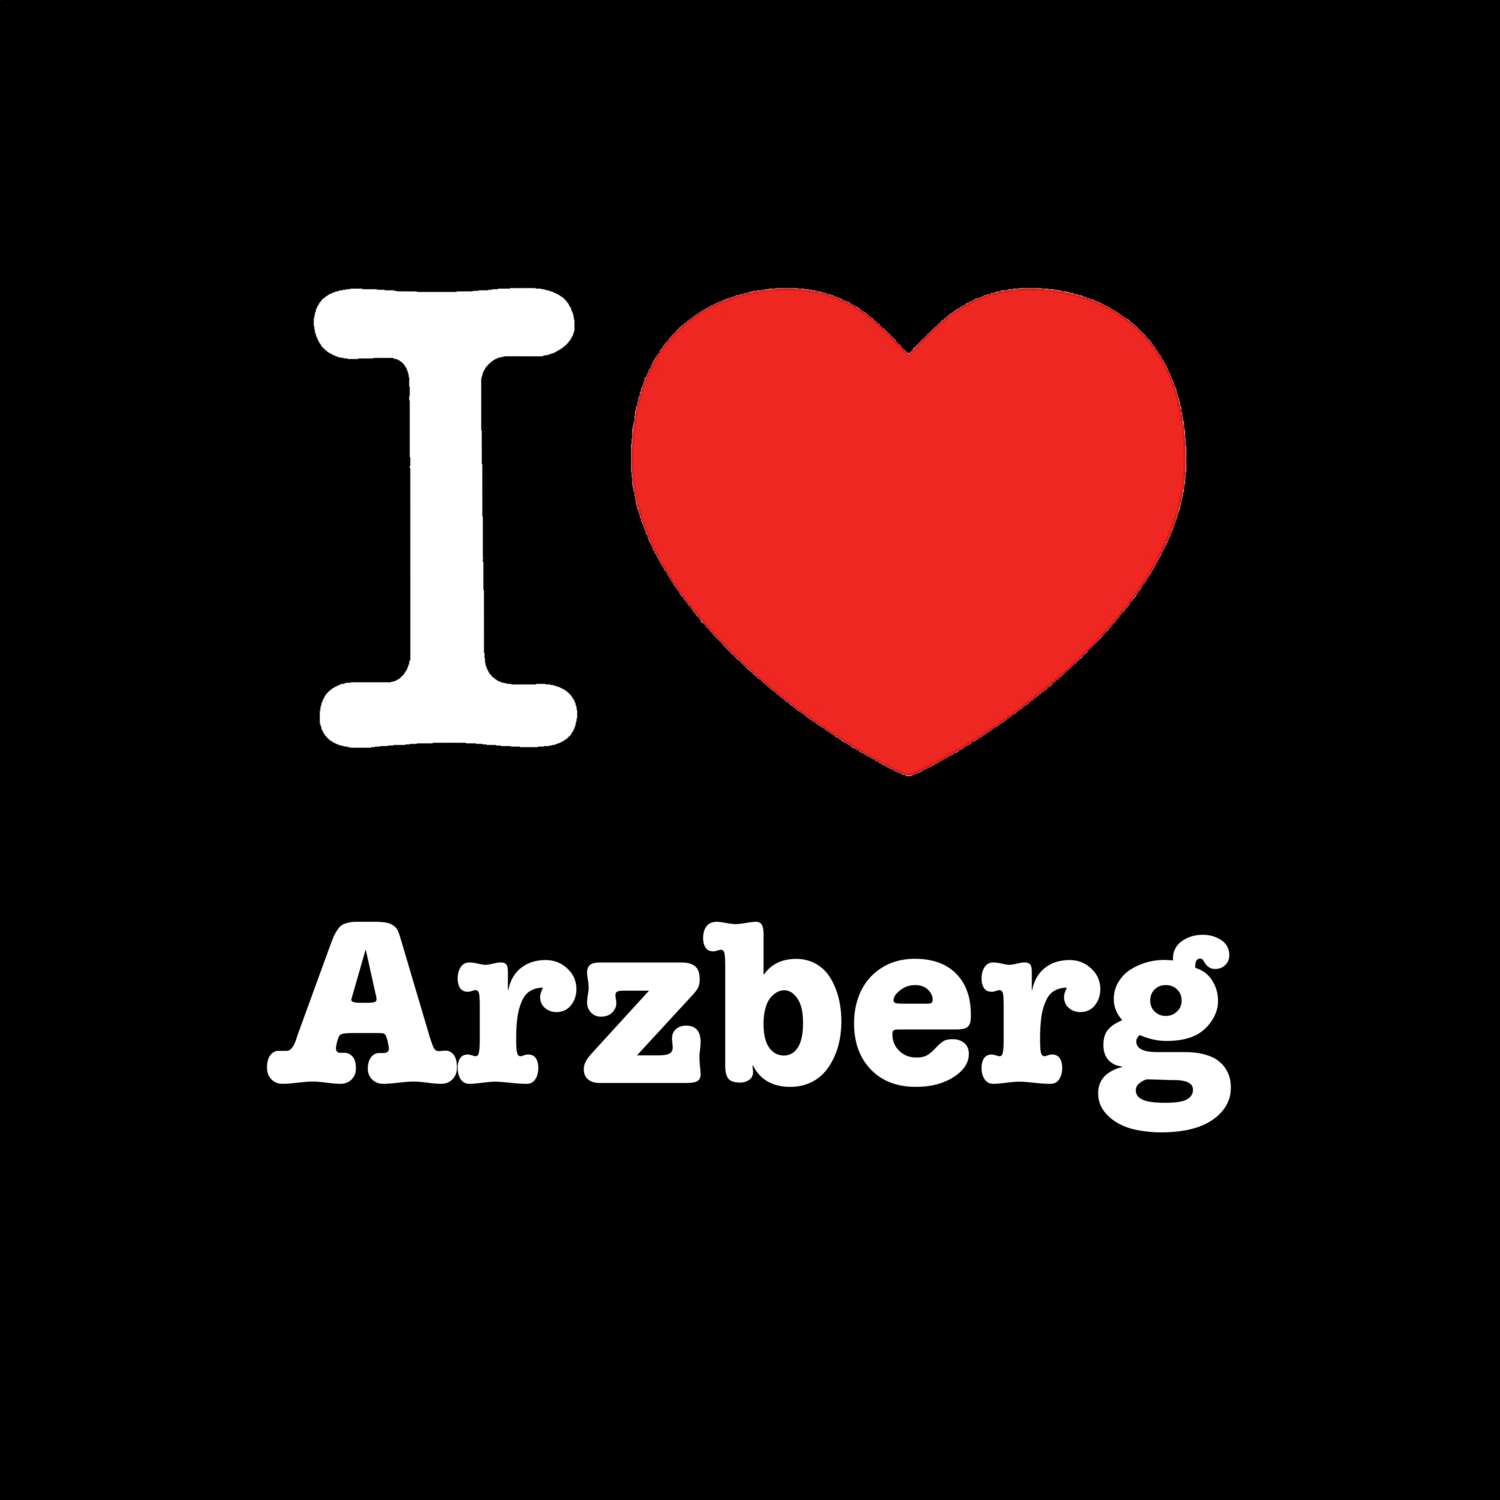 Arzberg T-Shirt »I love«